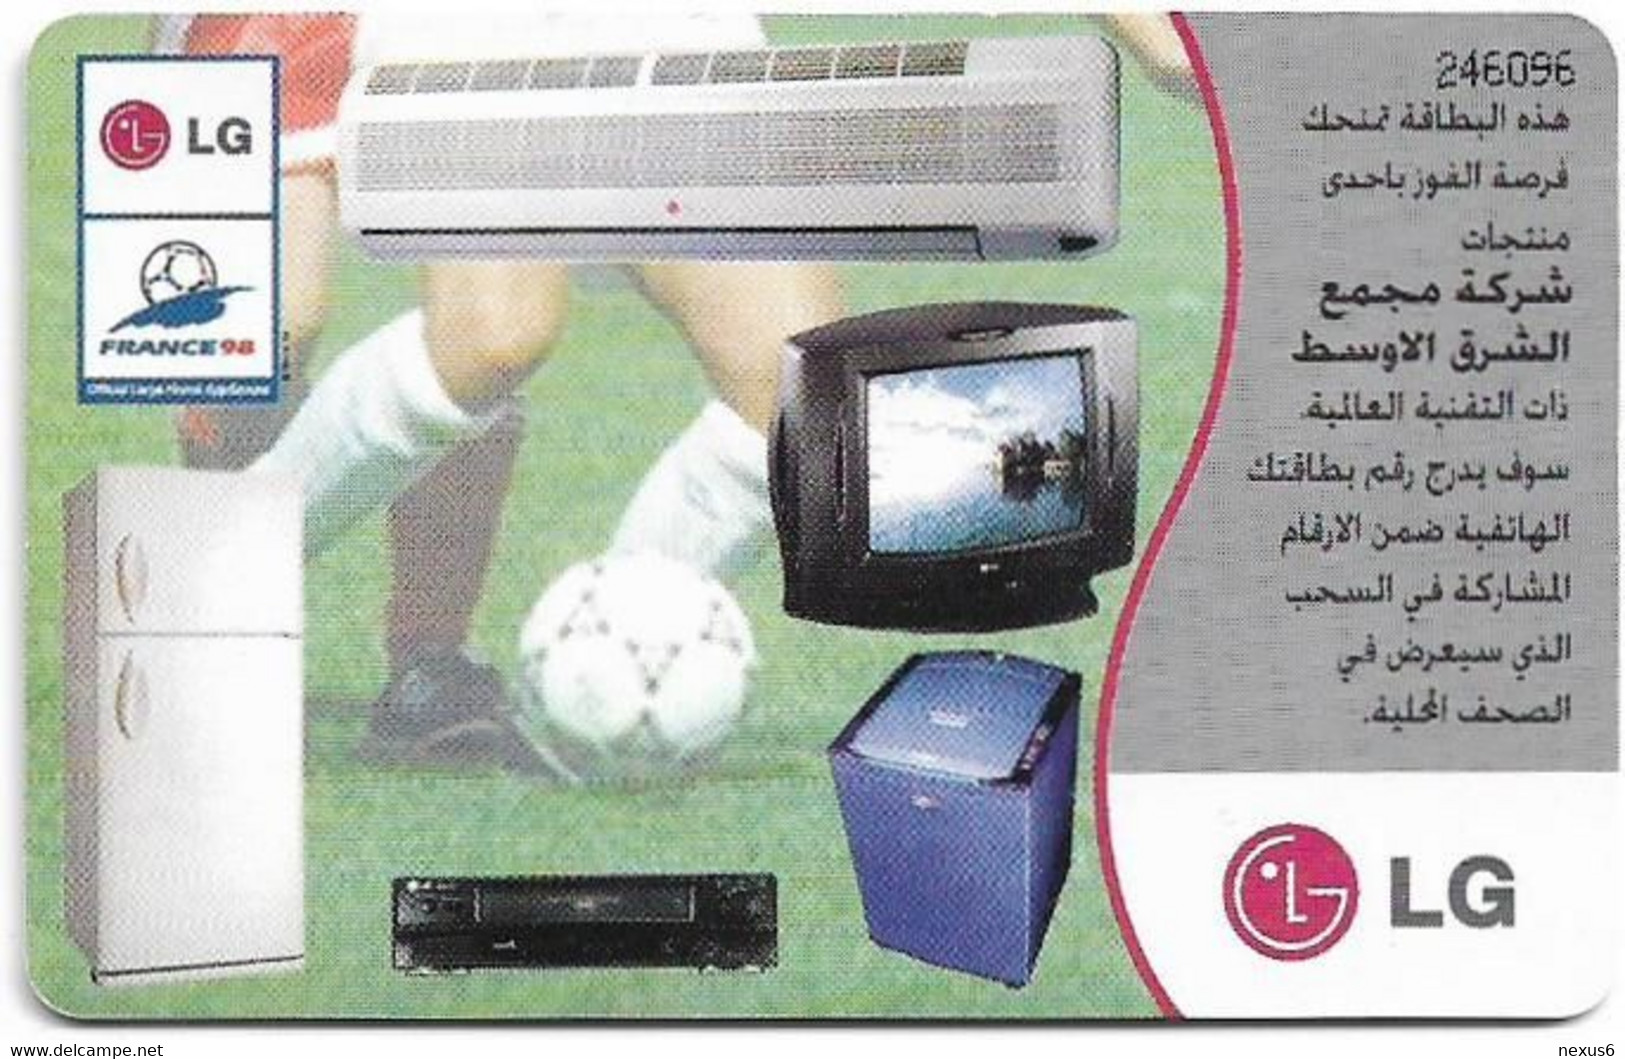 Jordan - Alo - Opel Car, Football And Applicances, 05.1998, 300.000ex, Used - Jordanie